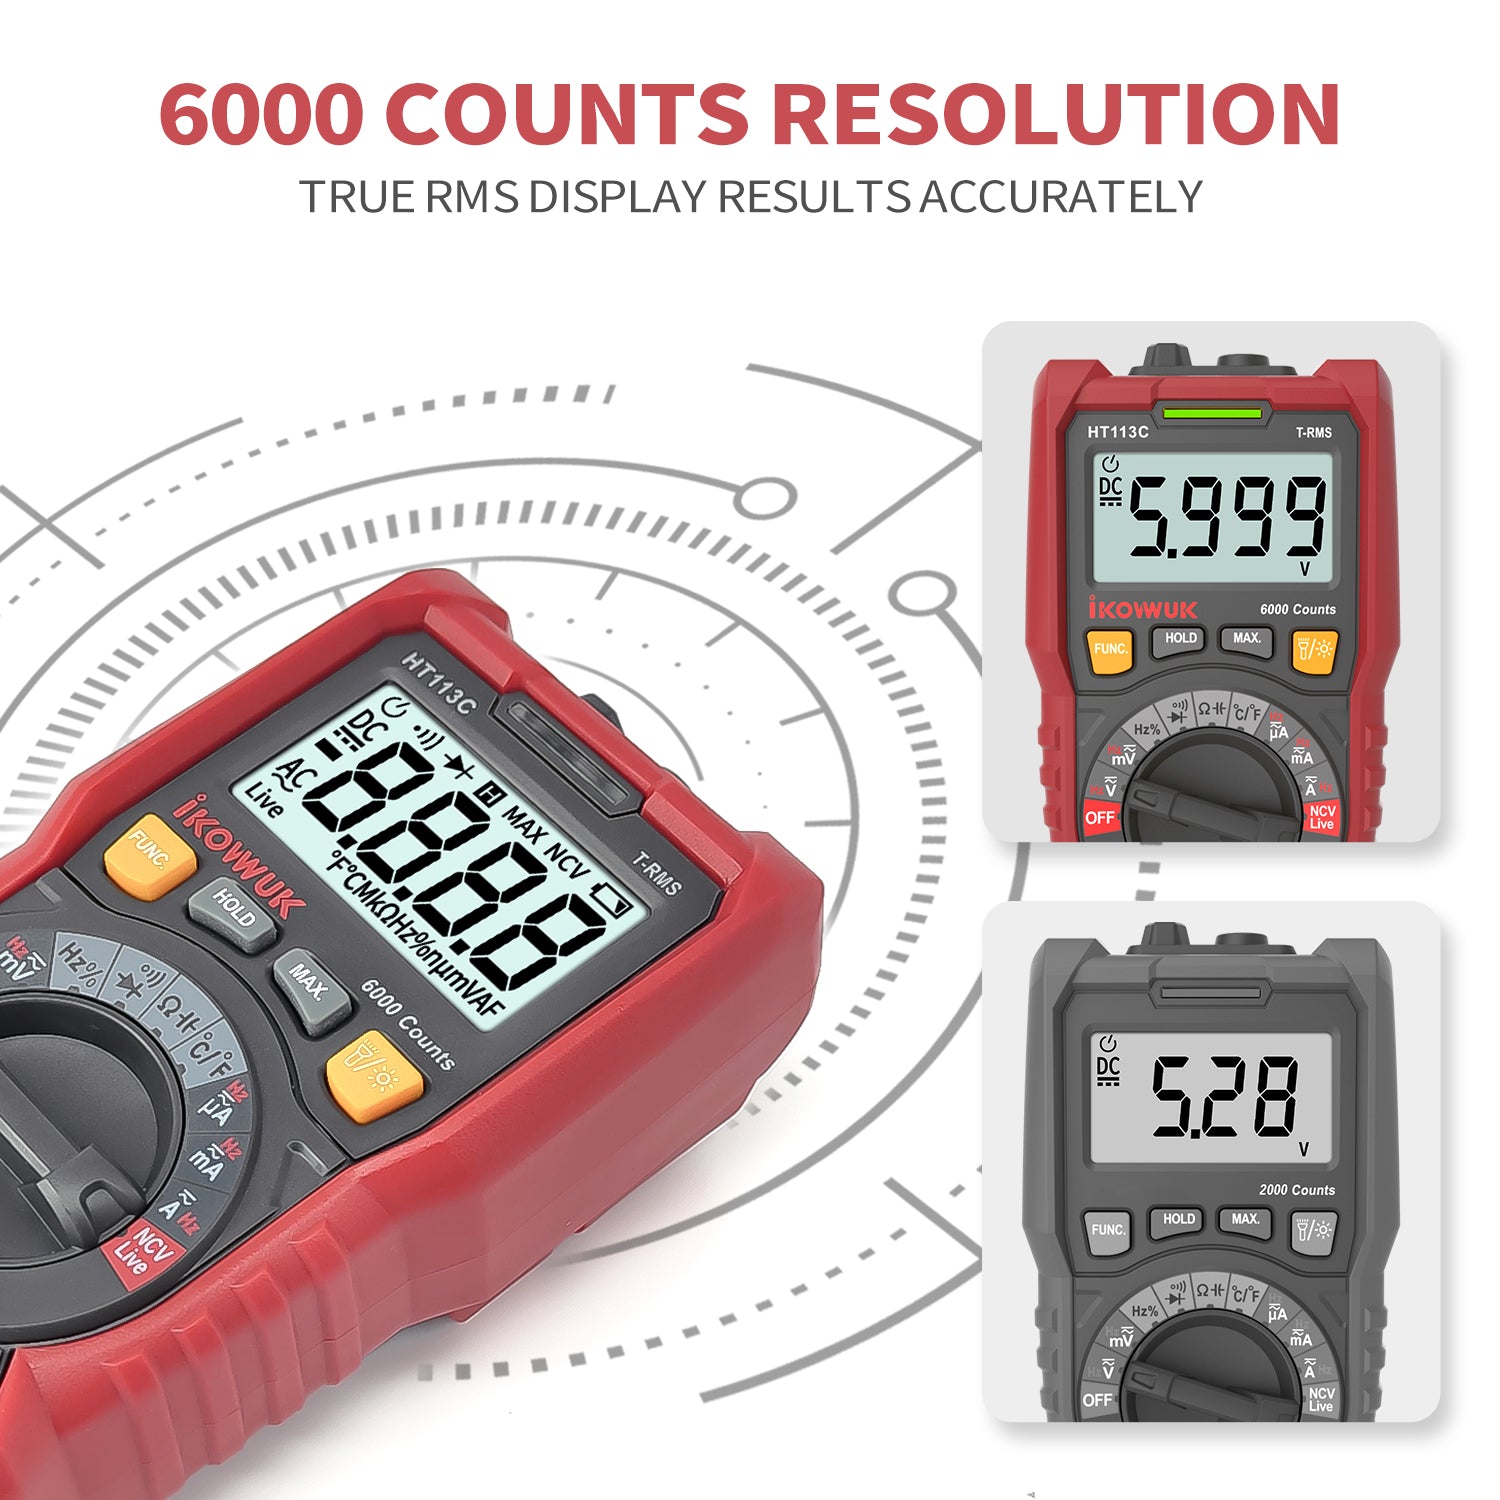 Ikovuwk Digital Multimeter TRMS 6000 Counts Voltmeter